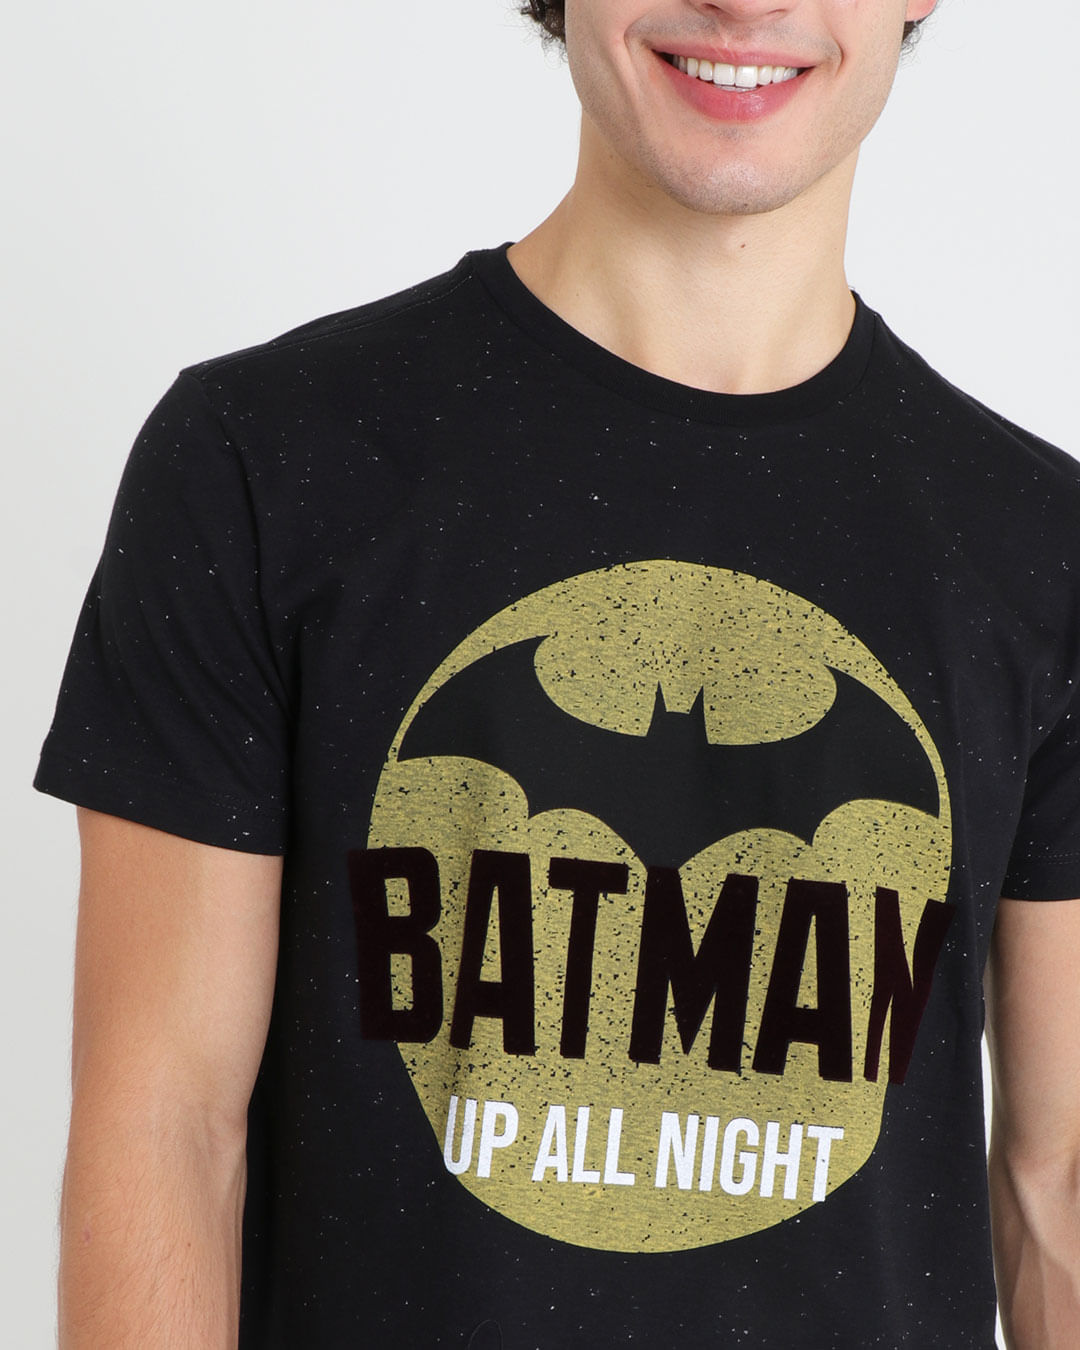 Camiseta-Trw121107--Batman-Floc-2---Preto